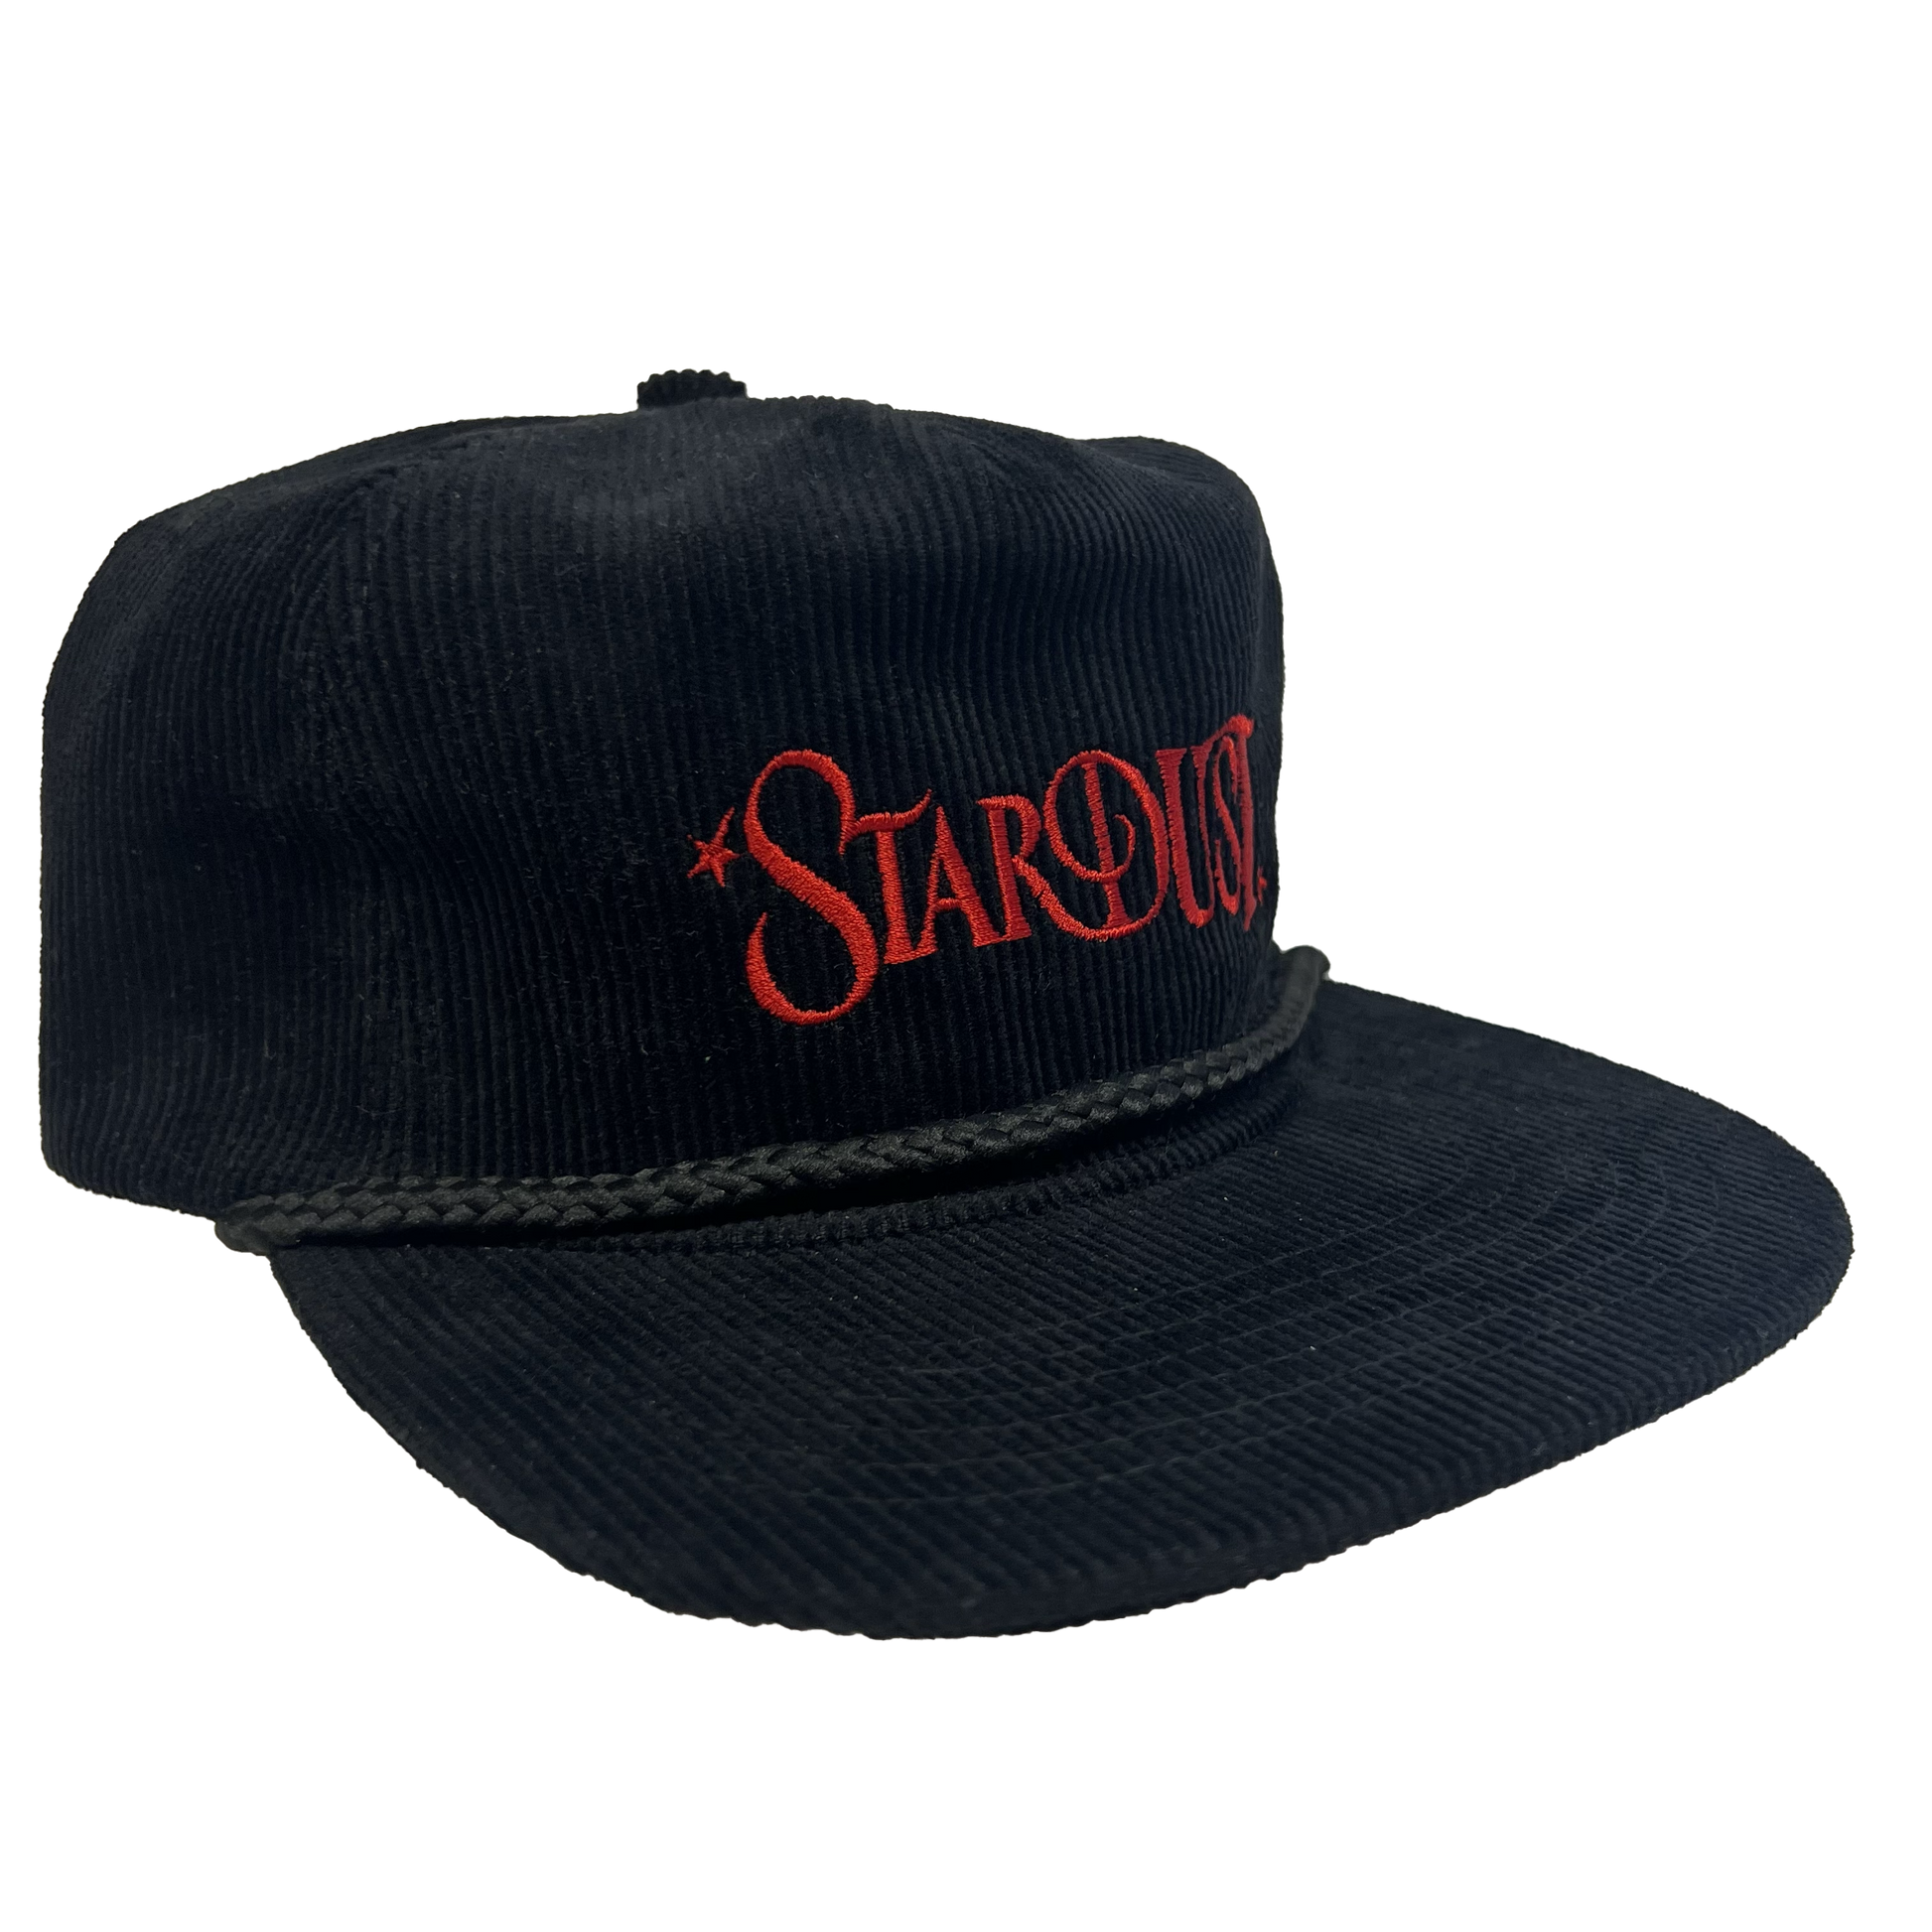 Stardust Wanderlust II Corduroy Snapback Hat 004 Black / Red